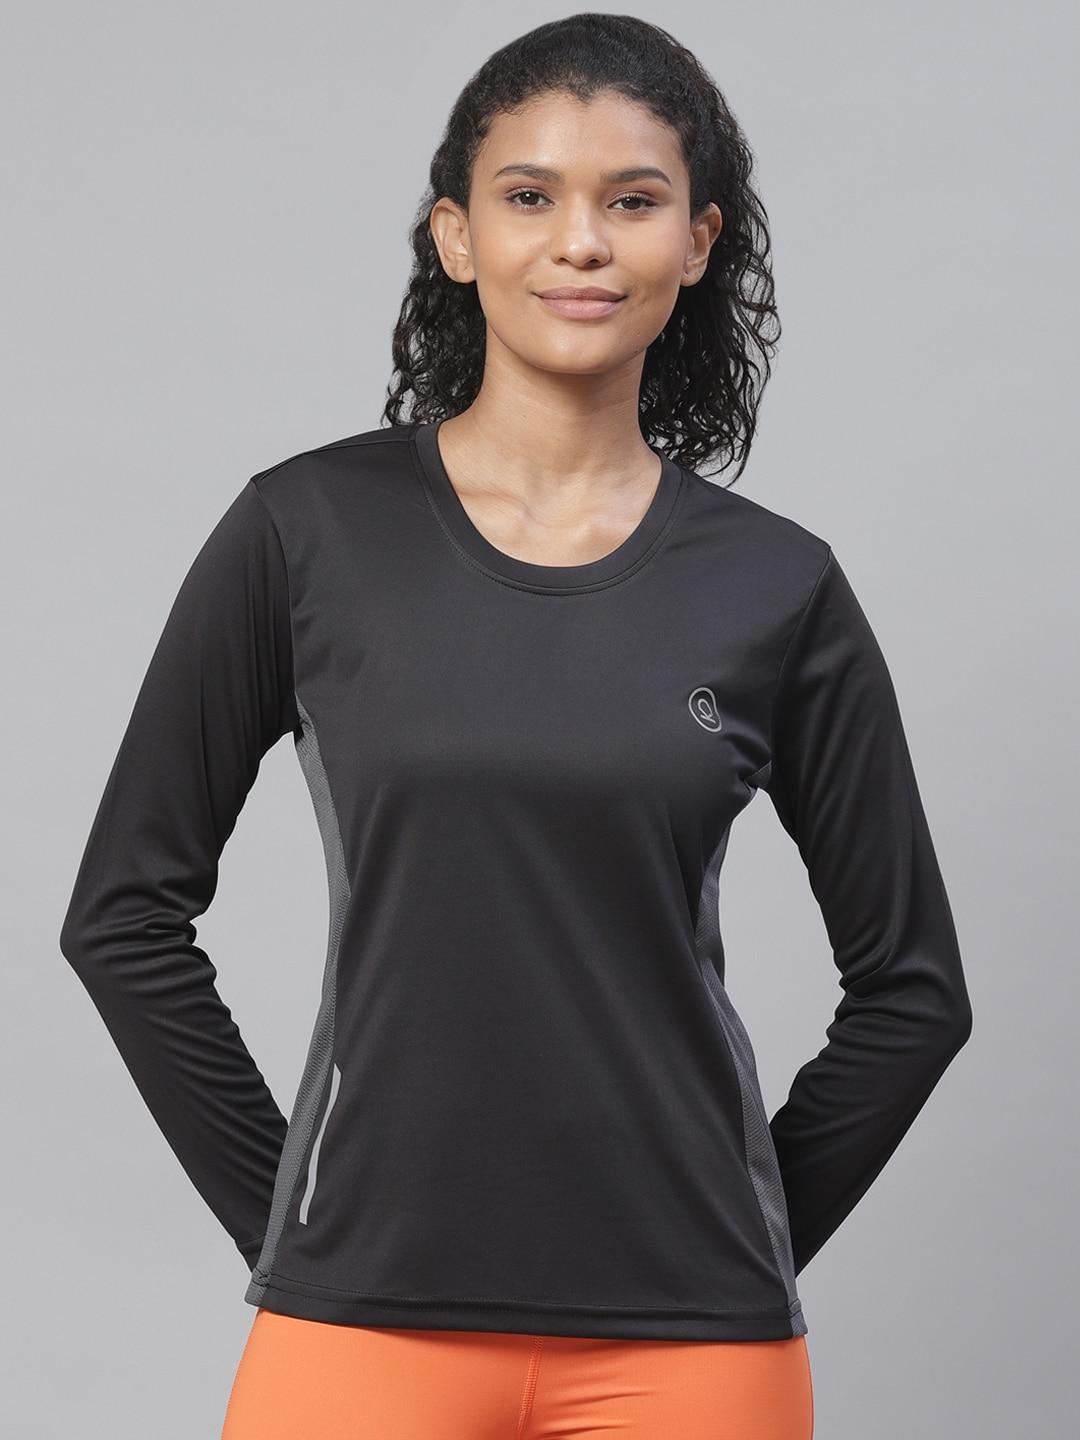 chkokko women black & grey colourblocked round neck yoga t-shirt